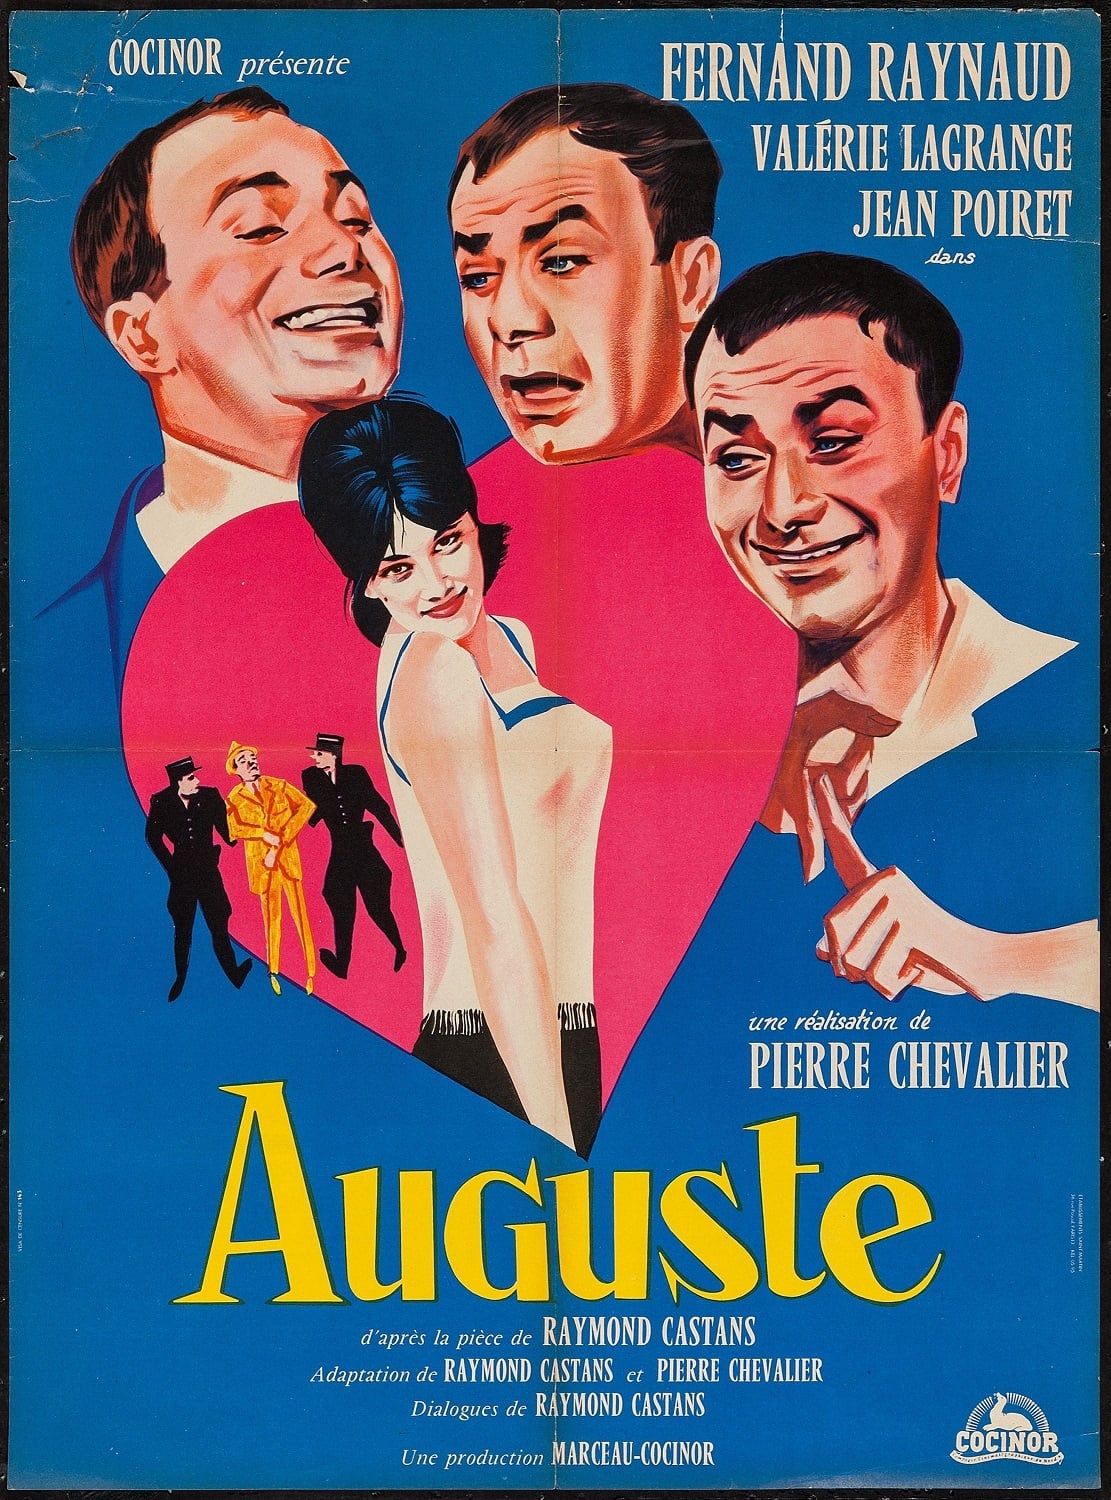 Auguste (1961)